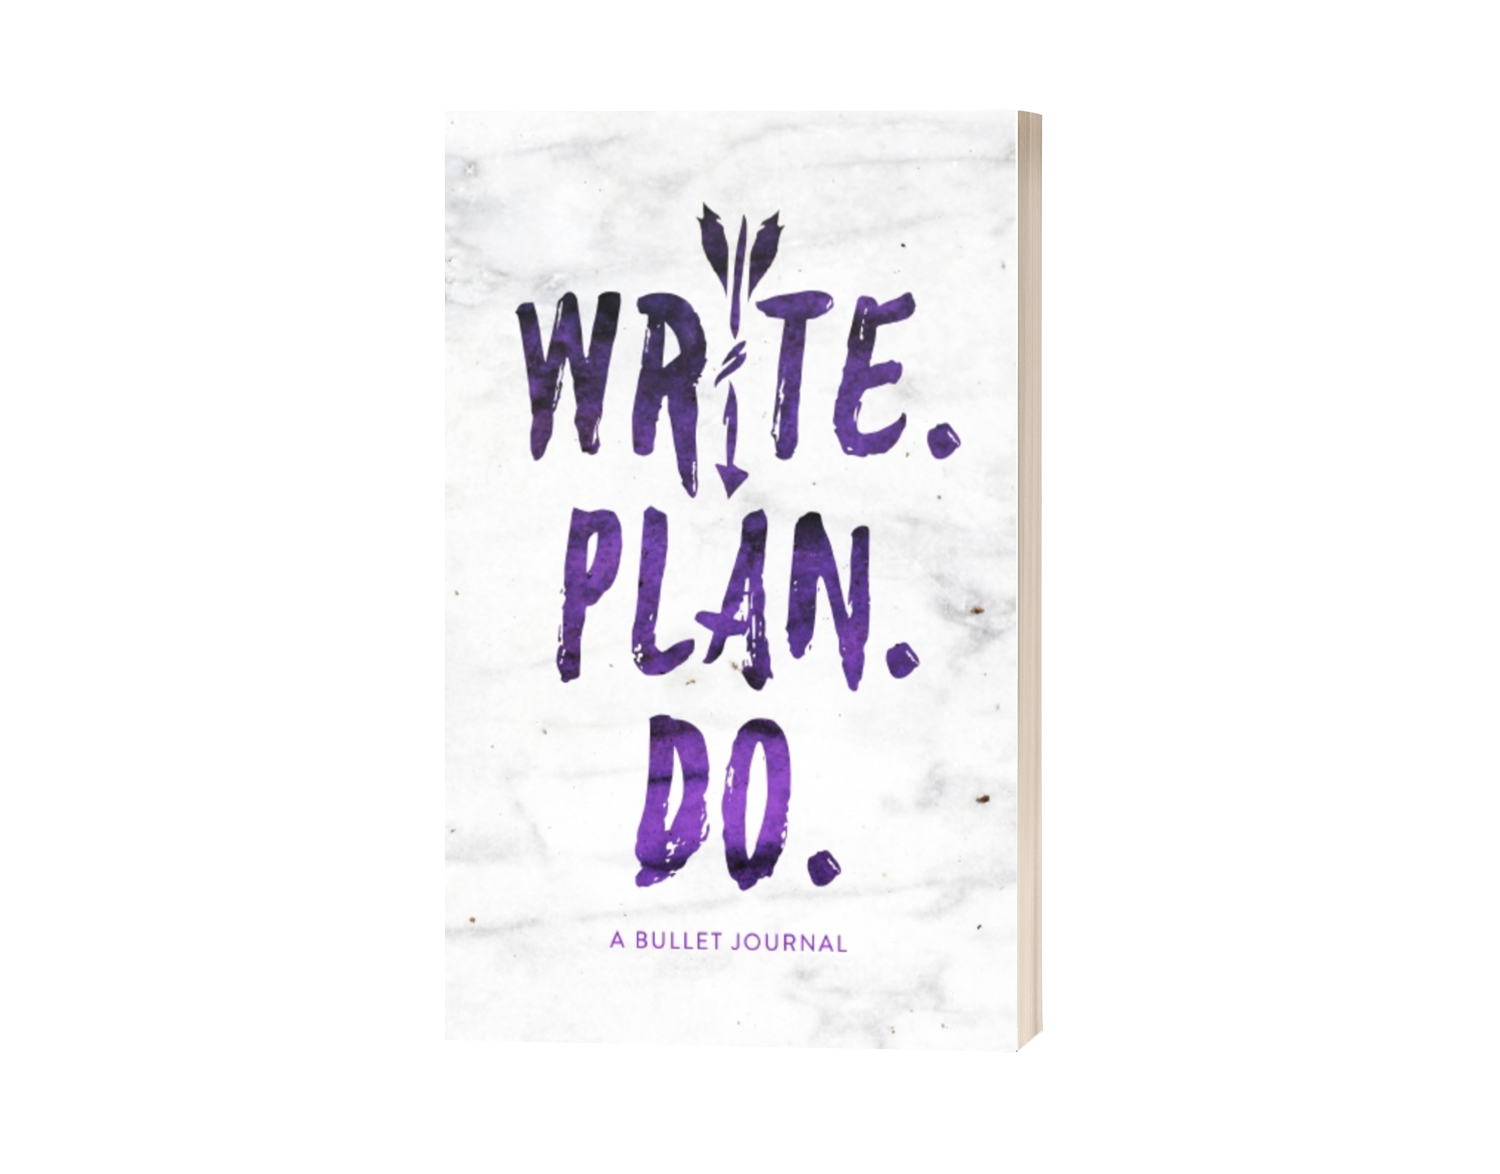 Write. Plan. Do. Bullet Journal (Purple)